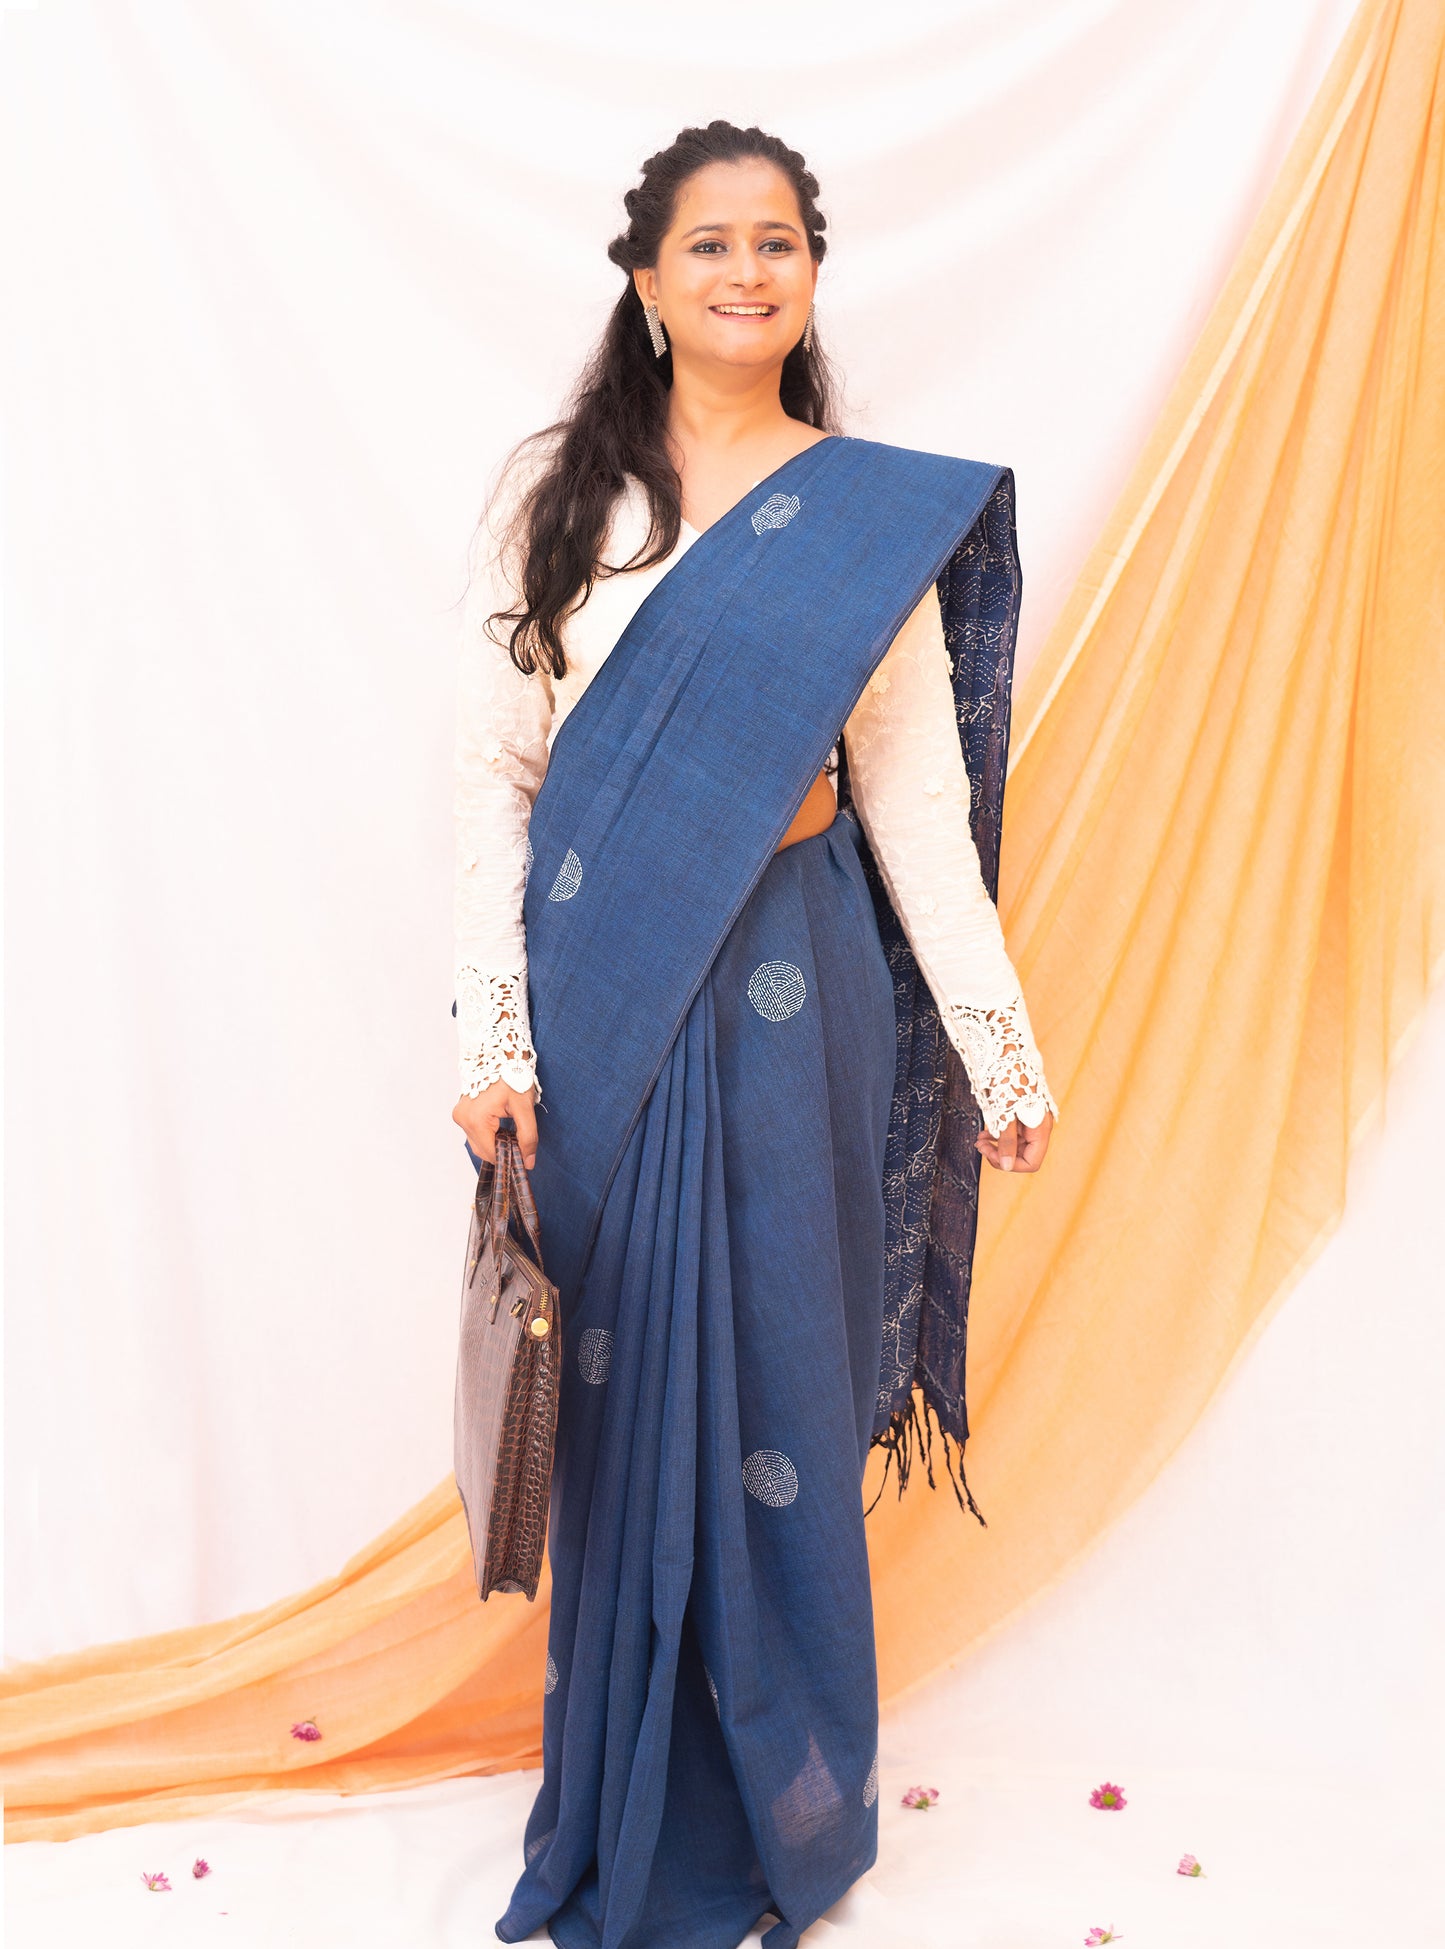 Indigo Circle Hand Embroidered Kantha Handloom Cotton Saree